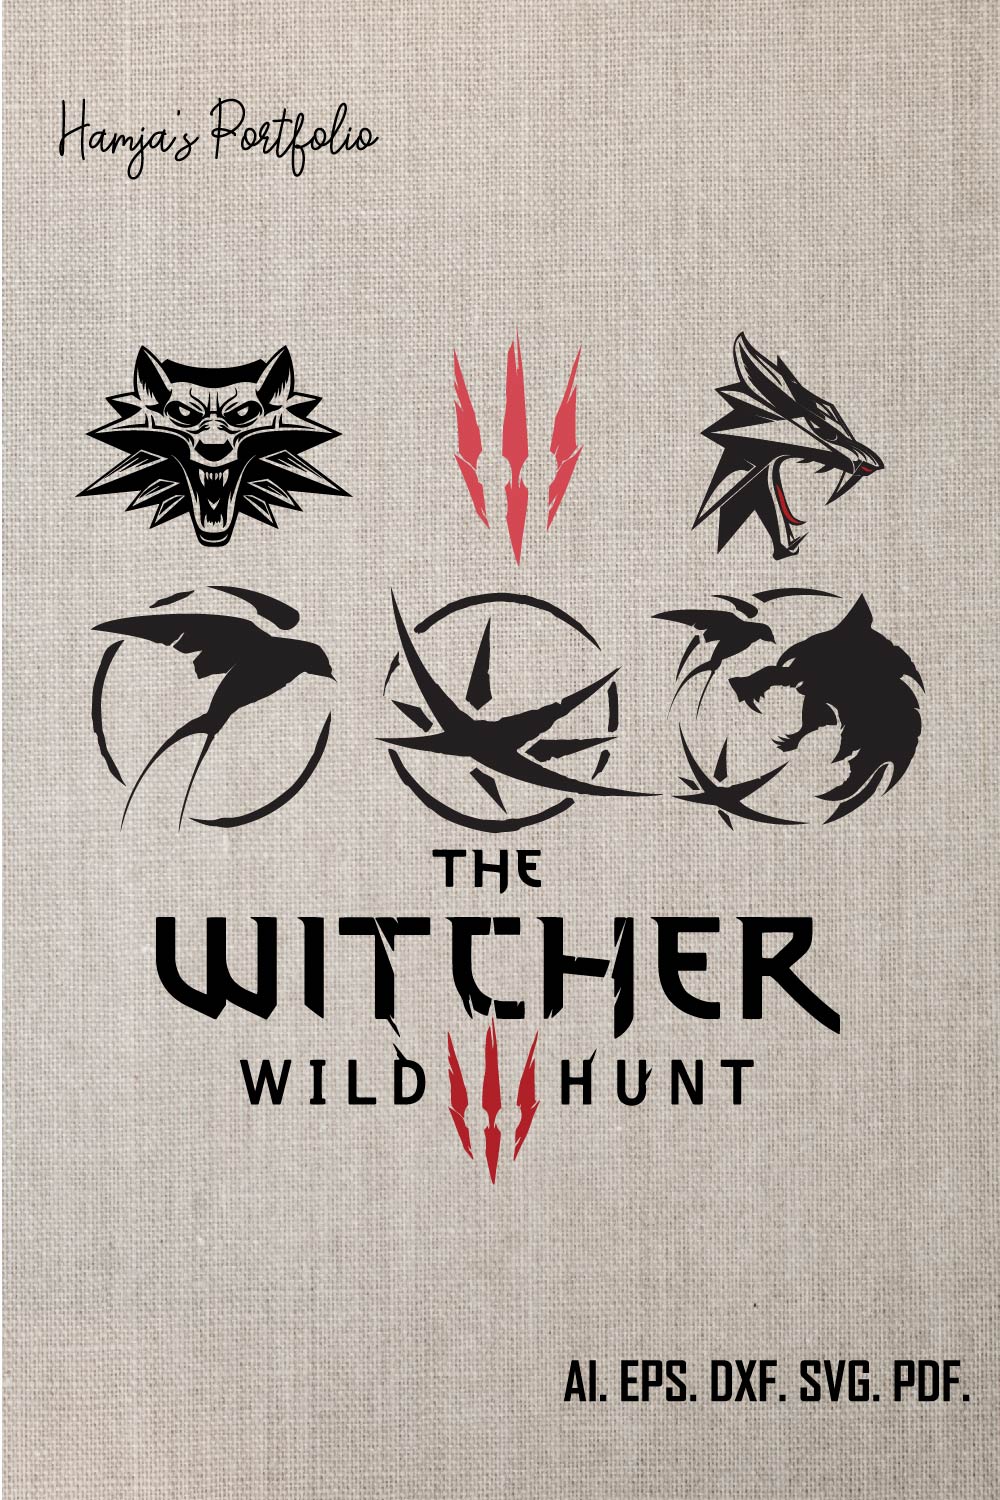 Witcher svg Bundle Pack , Geralt of Rivia svg, White wolf svg, Witcher Logo medallion svg, Silhouette SVG Cricut, dxf, png, jpg pinterest preview image.